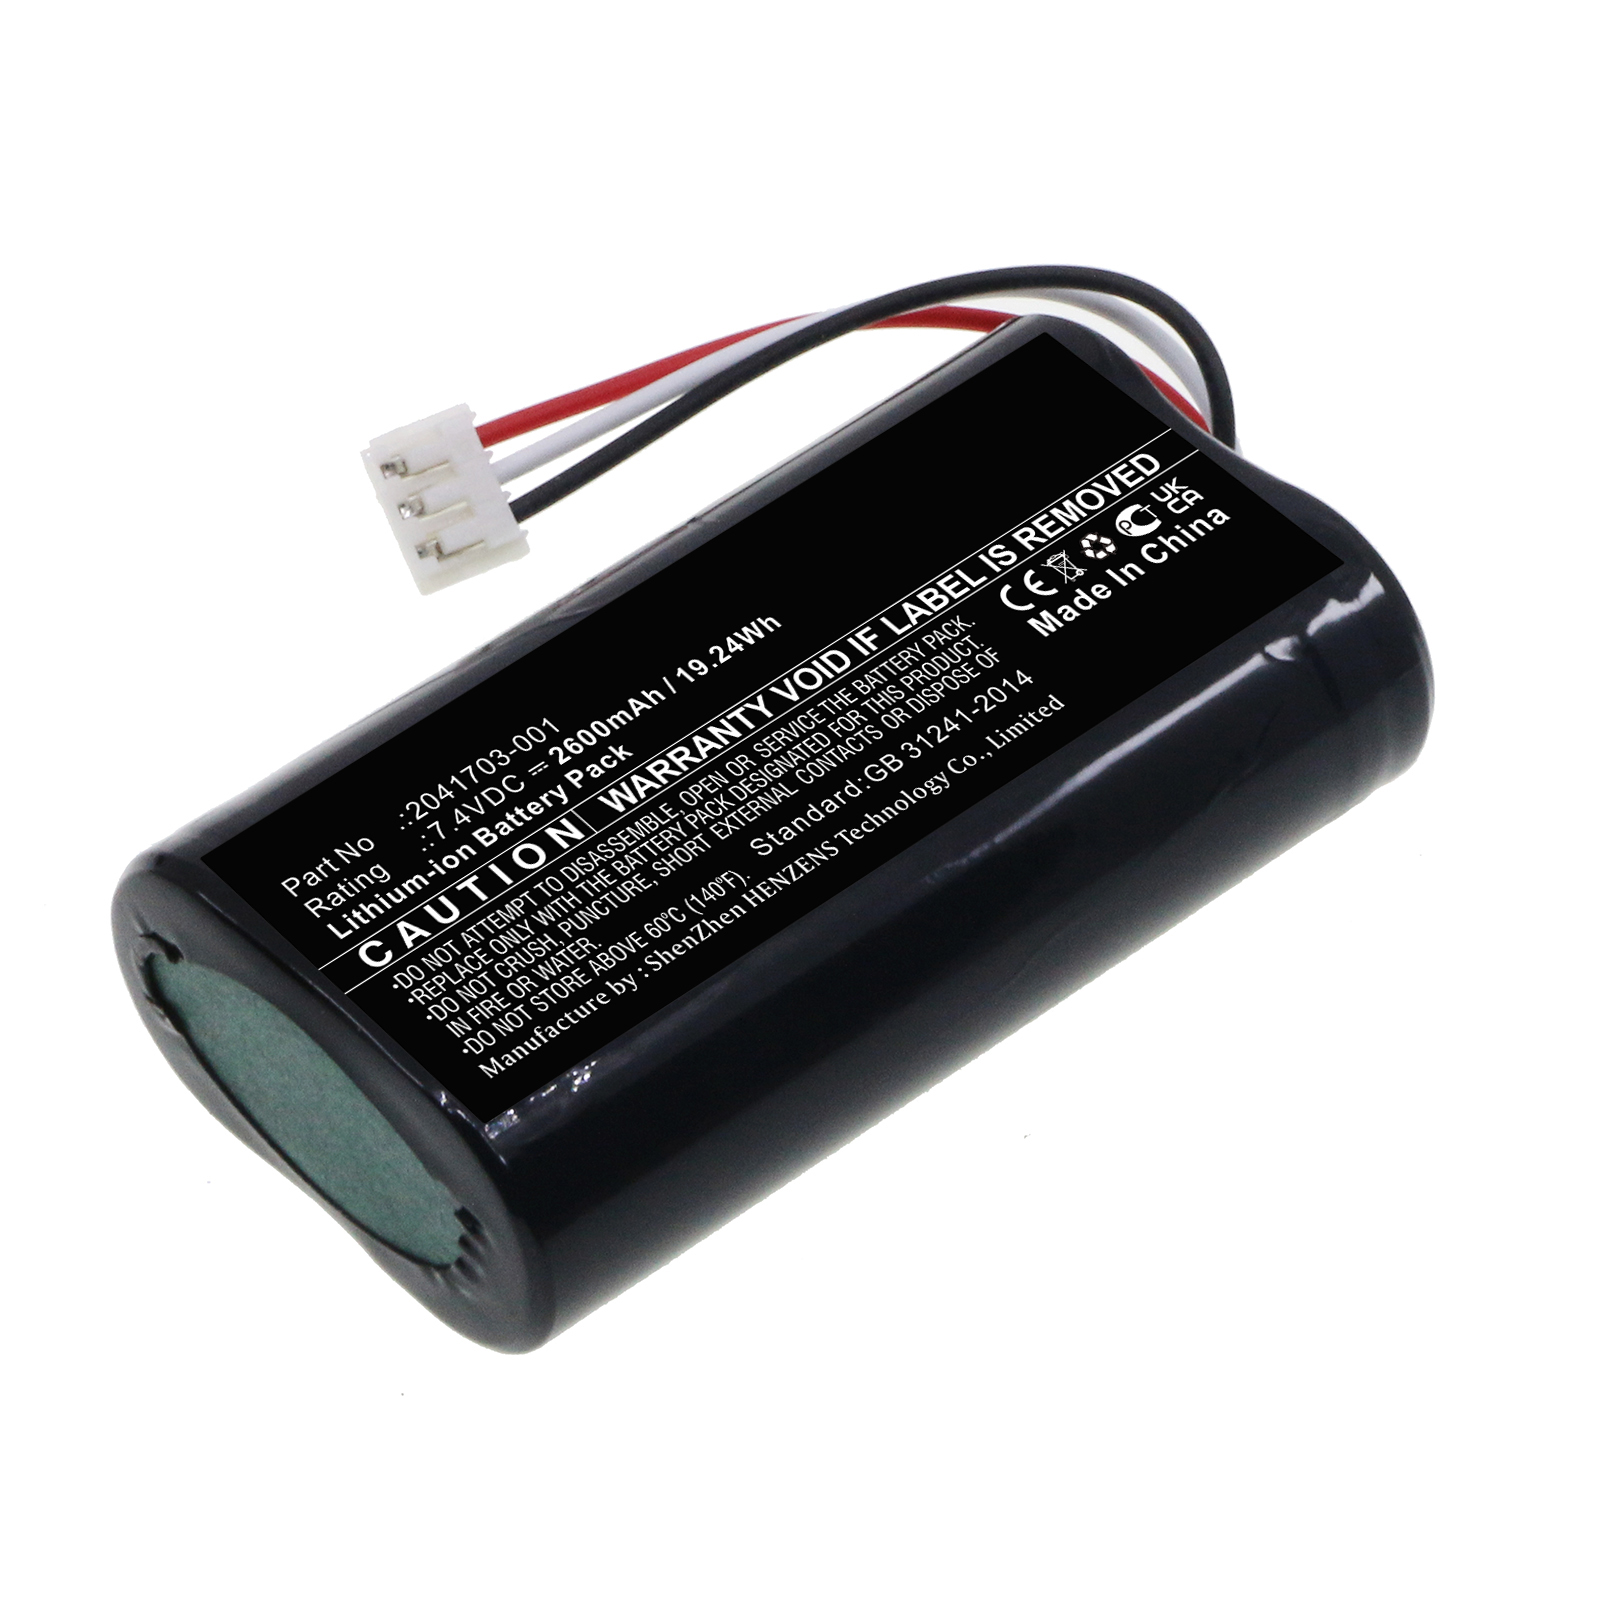 Synergy Digital Medical Battery, Compatible with GE 2041703-001 Medical Battery (Li-ion, 7.4V, 3400mAh)